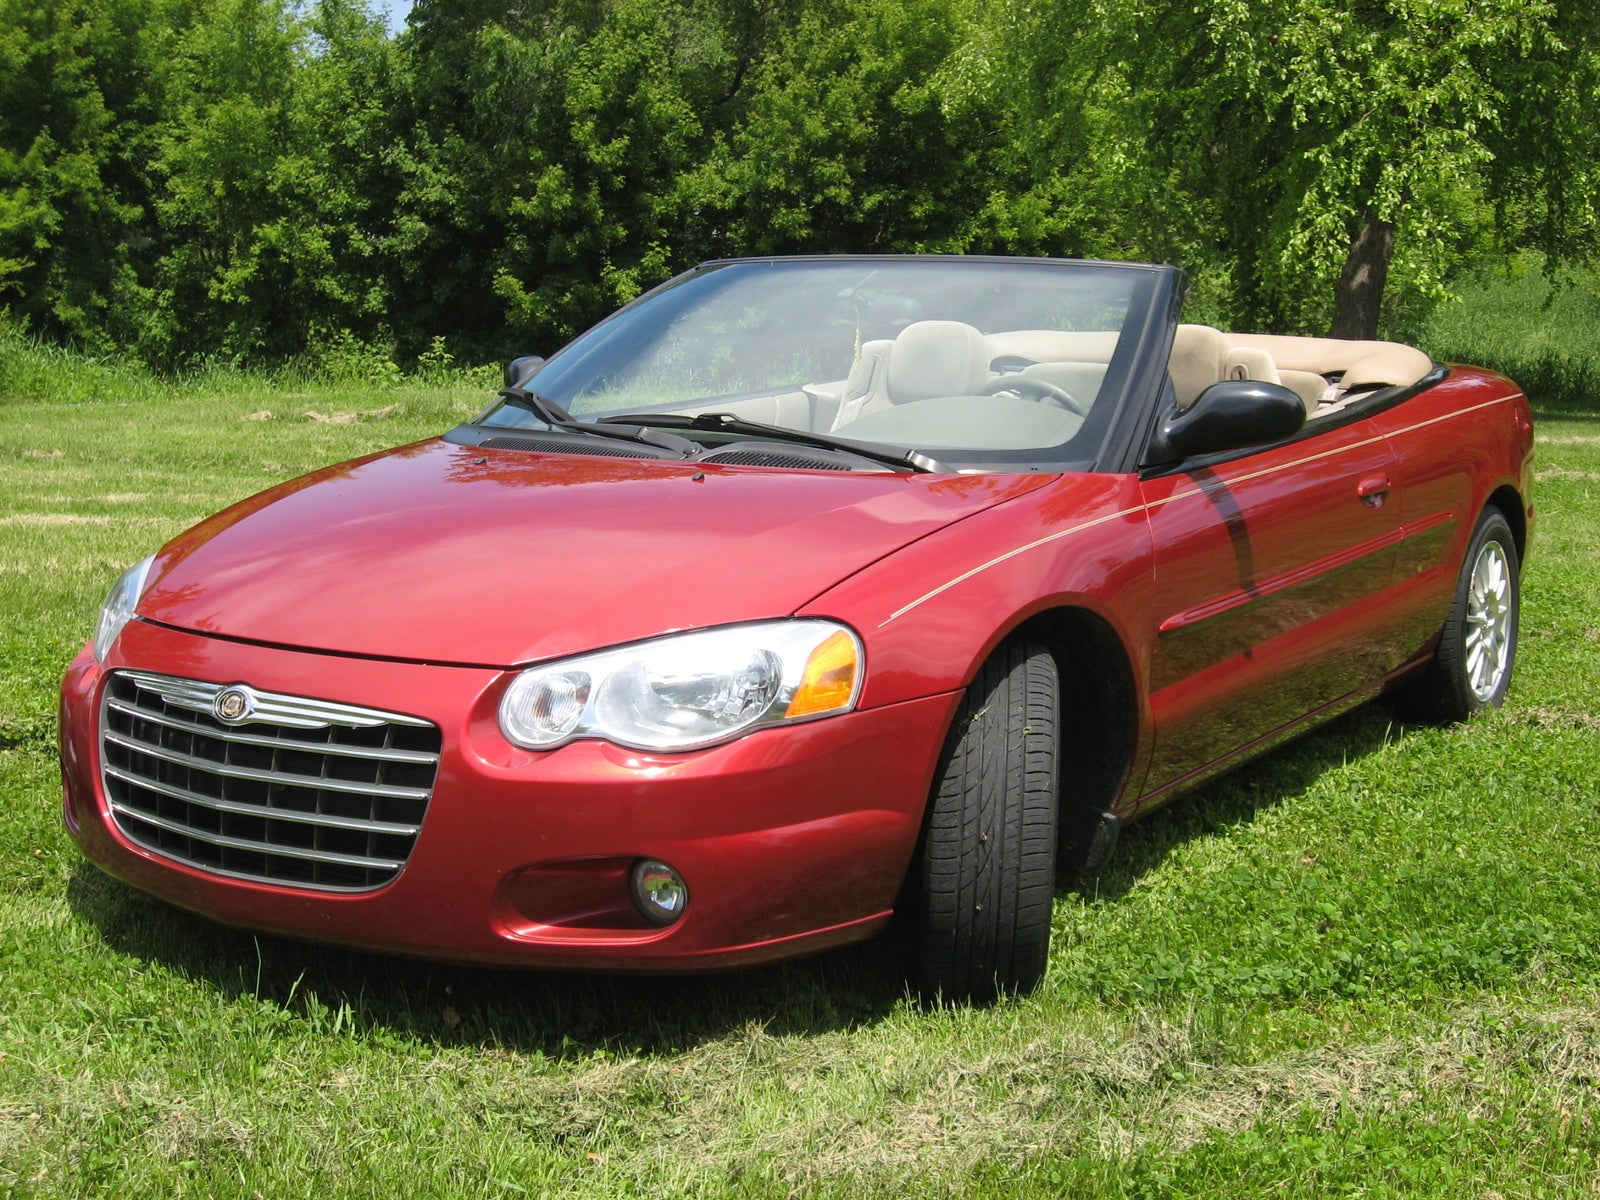 2002 Chrysler sebring convertible problems